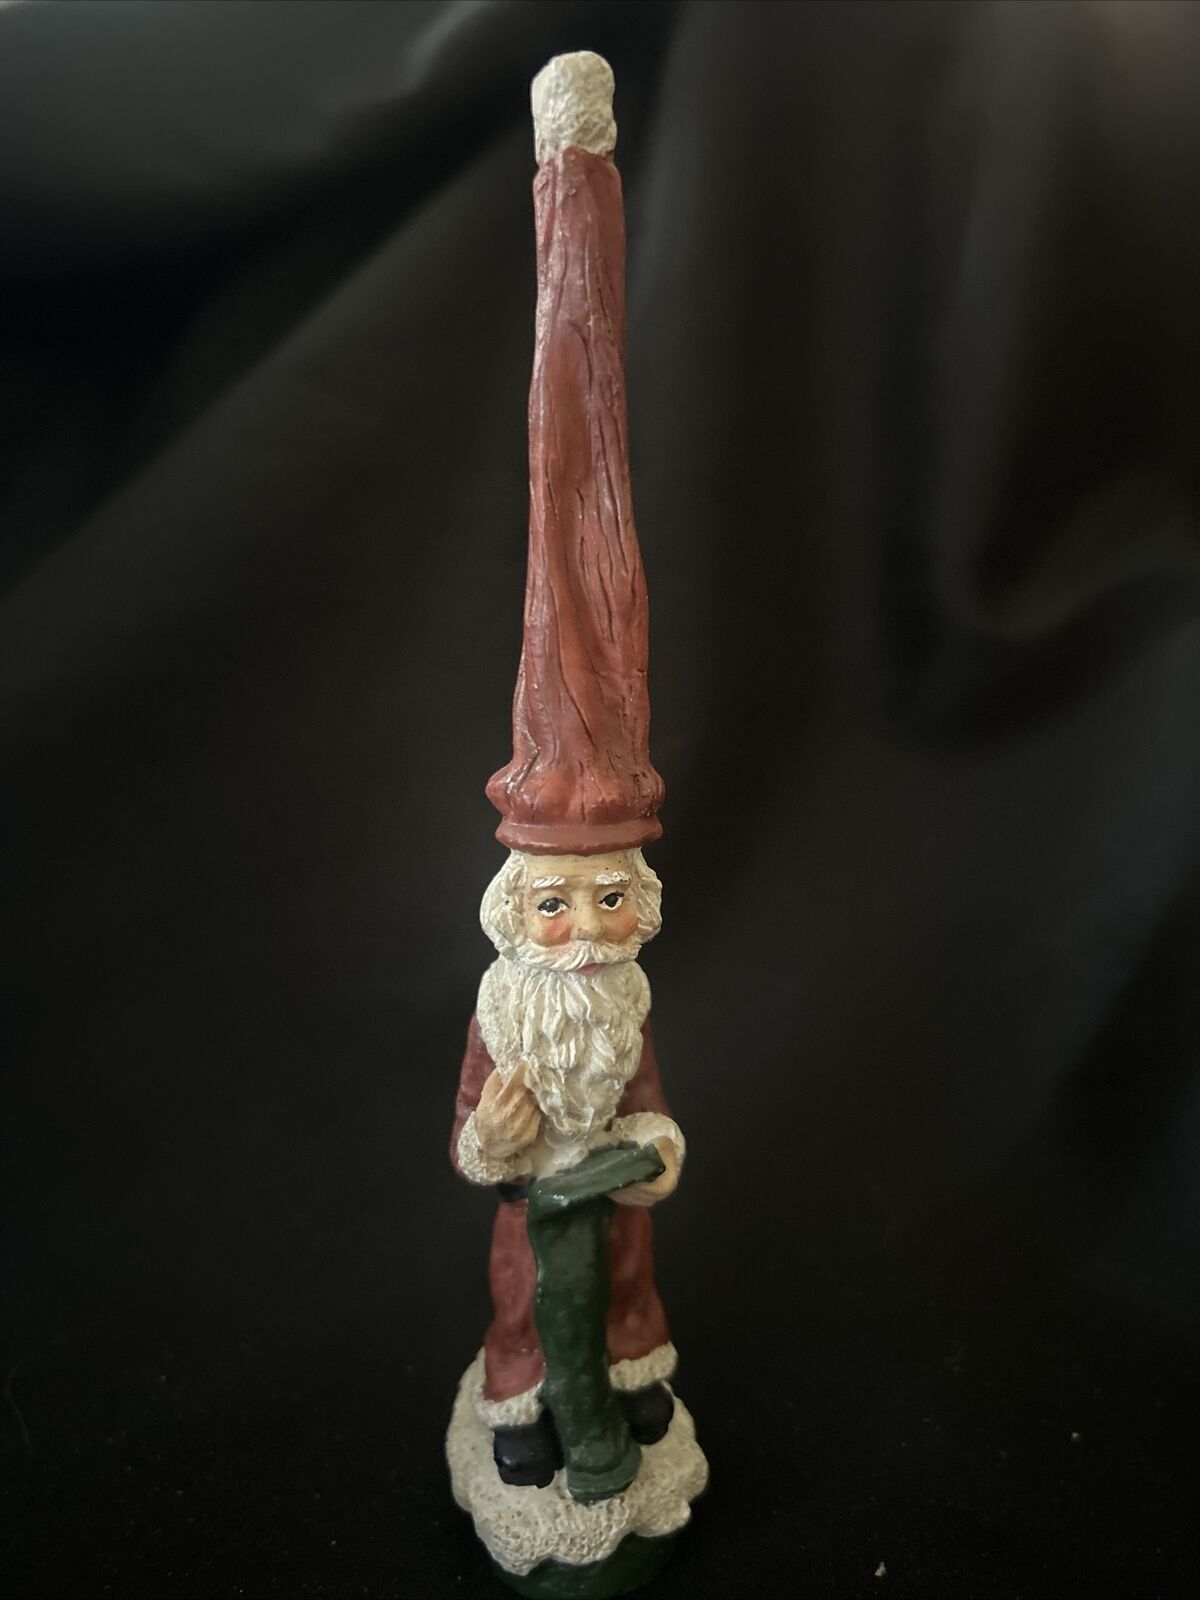 Long Hat Tall Santa Claus Figurine Christmas Rustic Painted Ceramic 6”